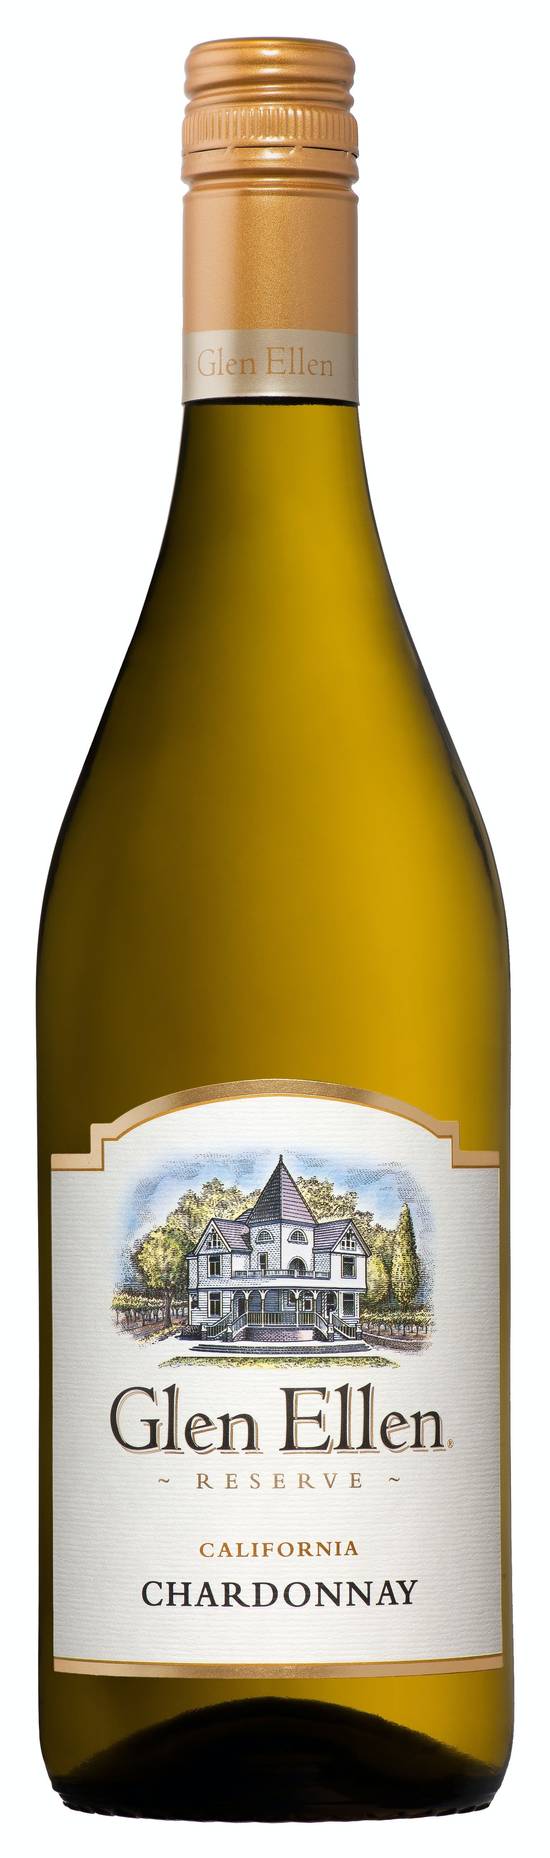 Glen Ellen California Chardonnay Reserve Wine (750 ml)